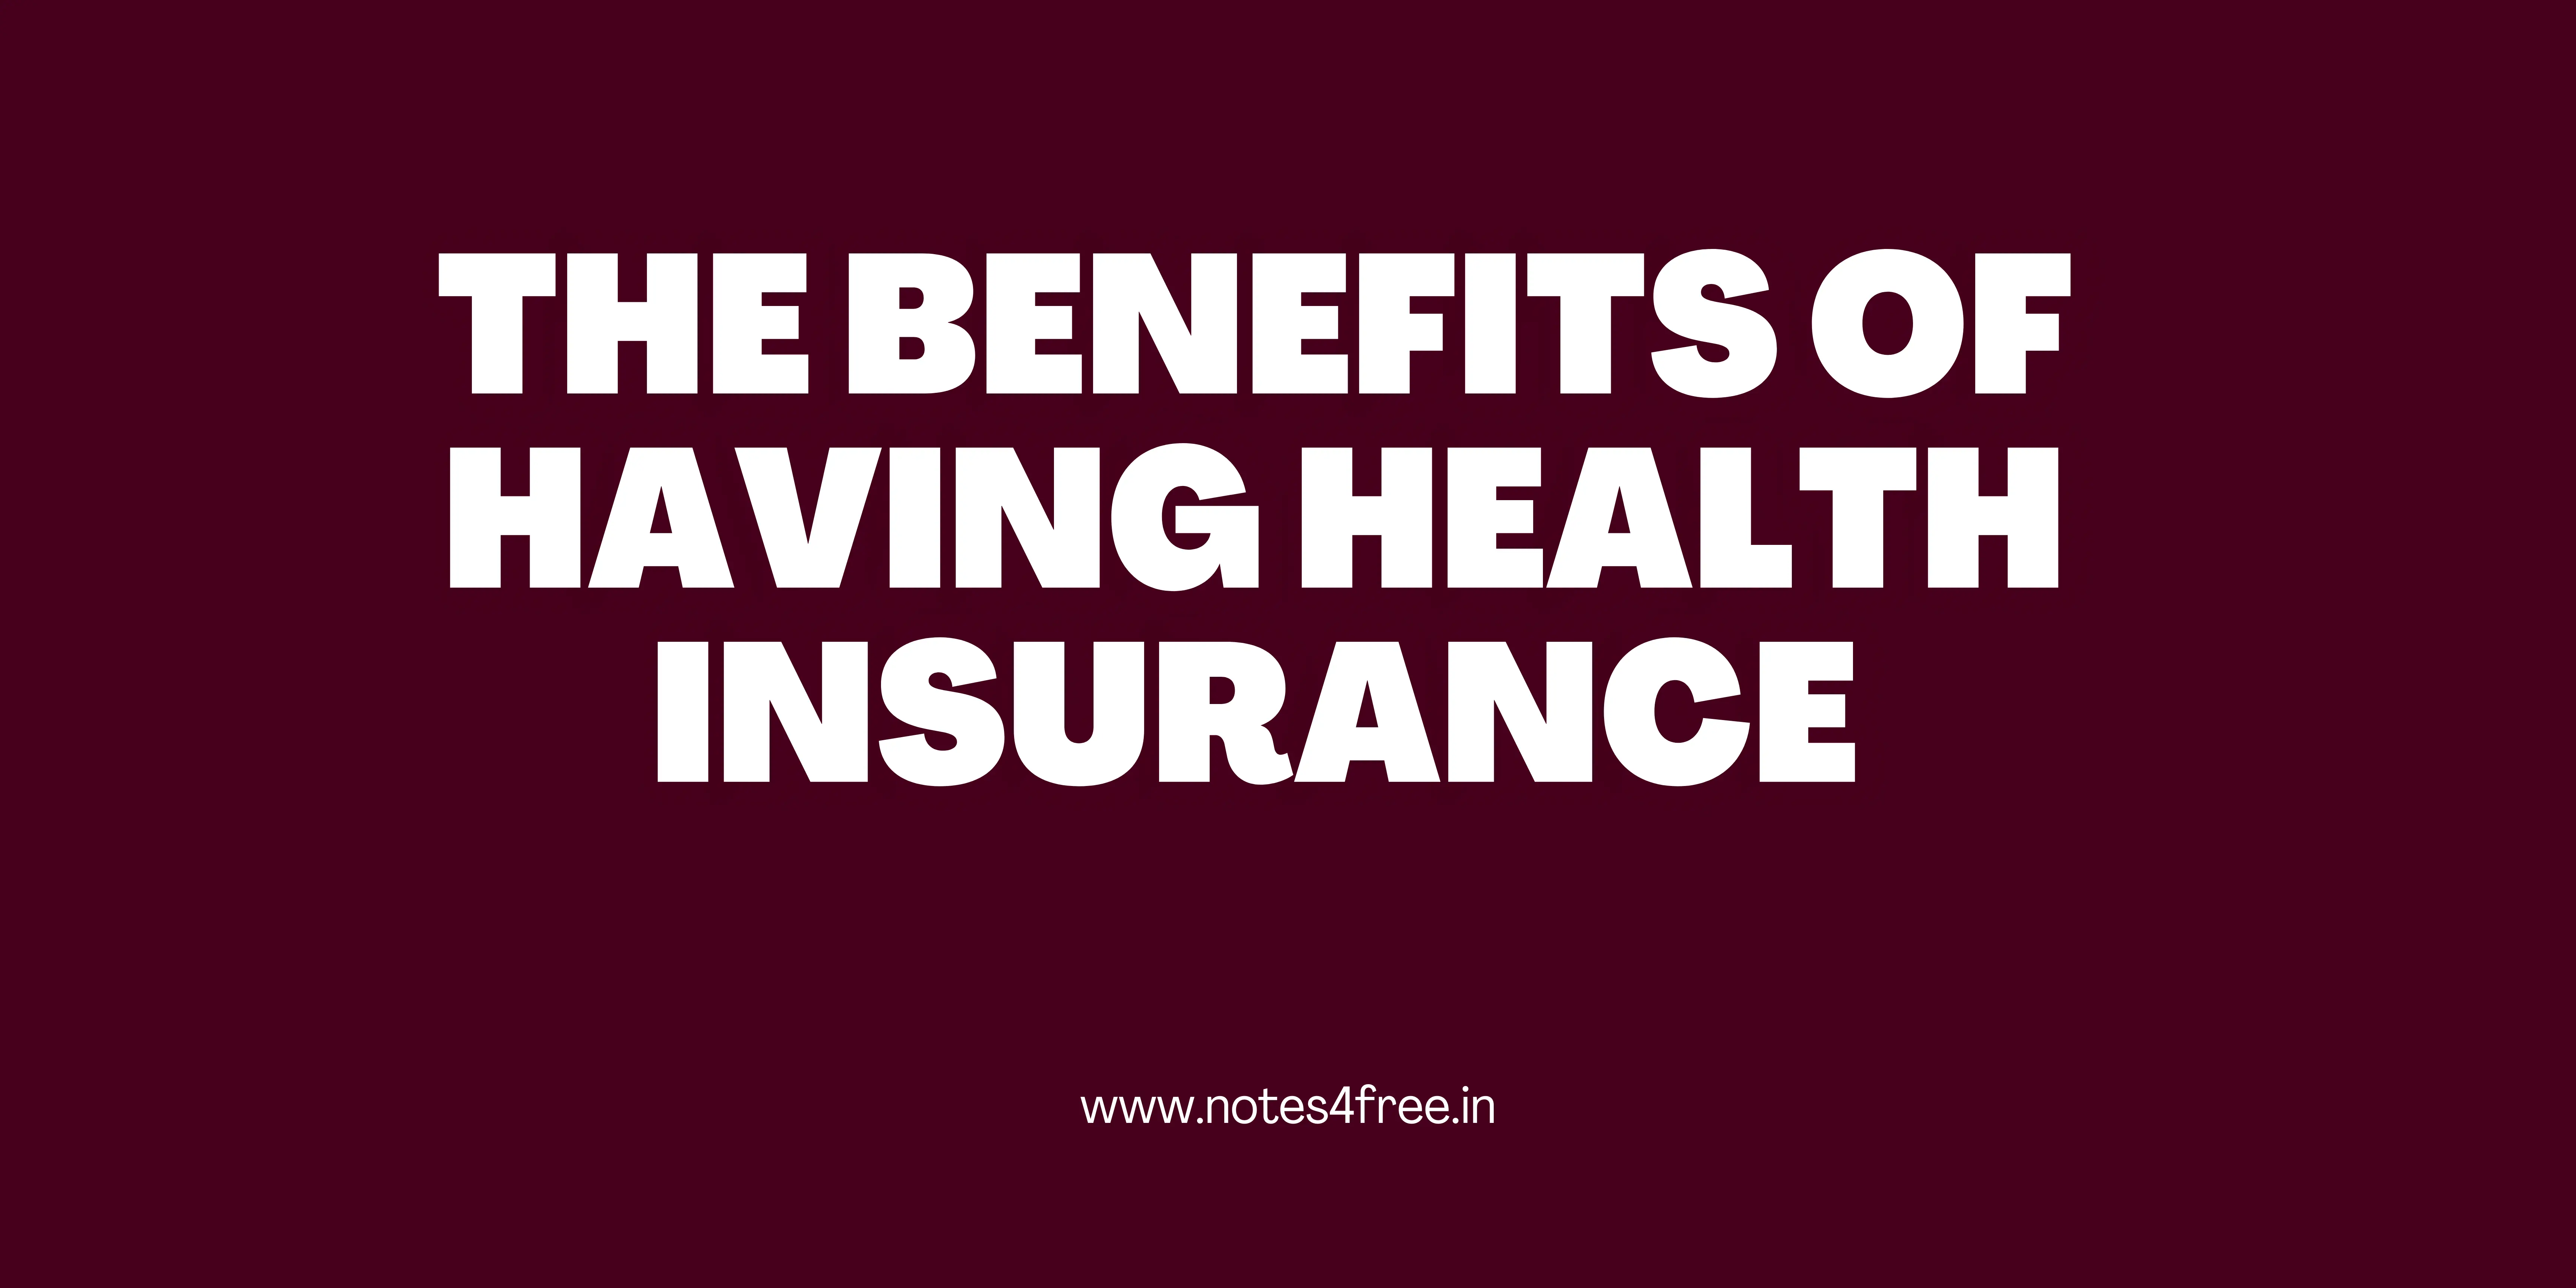 The Benefits of Having Health Insurance